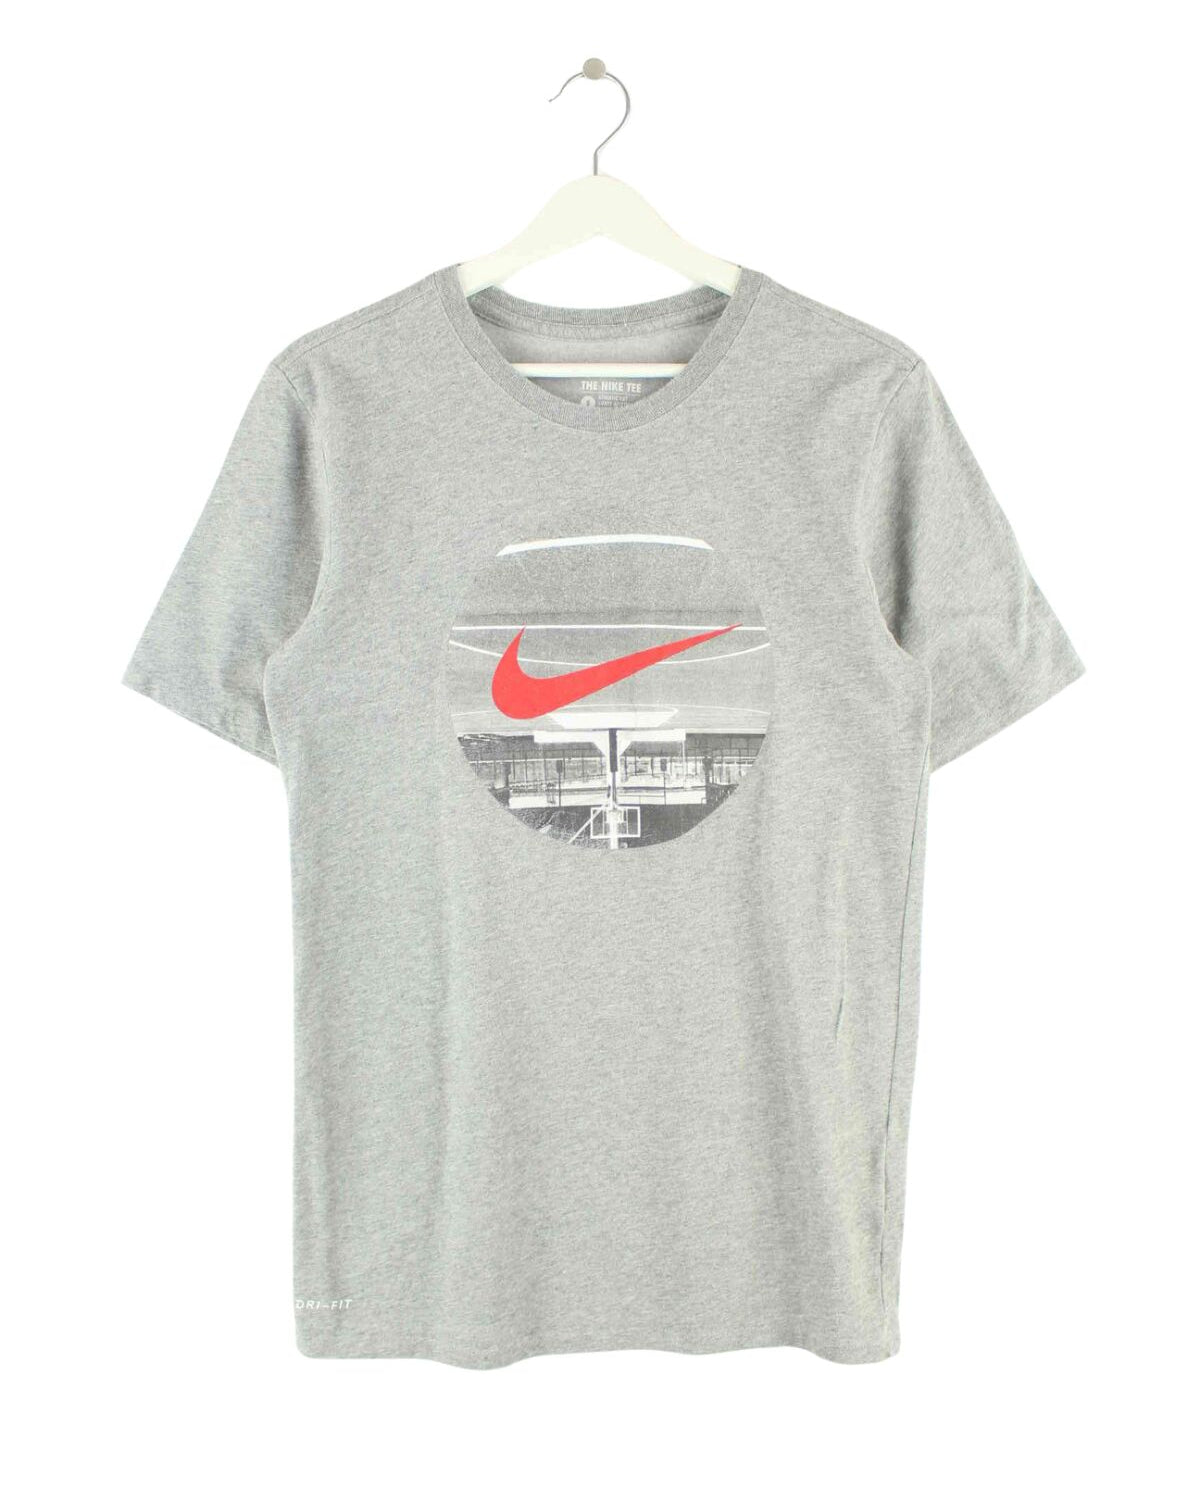 Nike Basketball Print T-Shirt Grau S (front image)